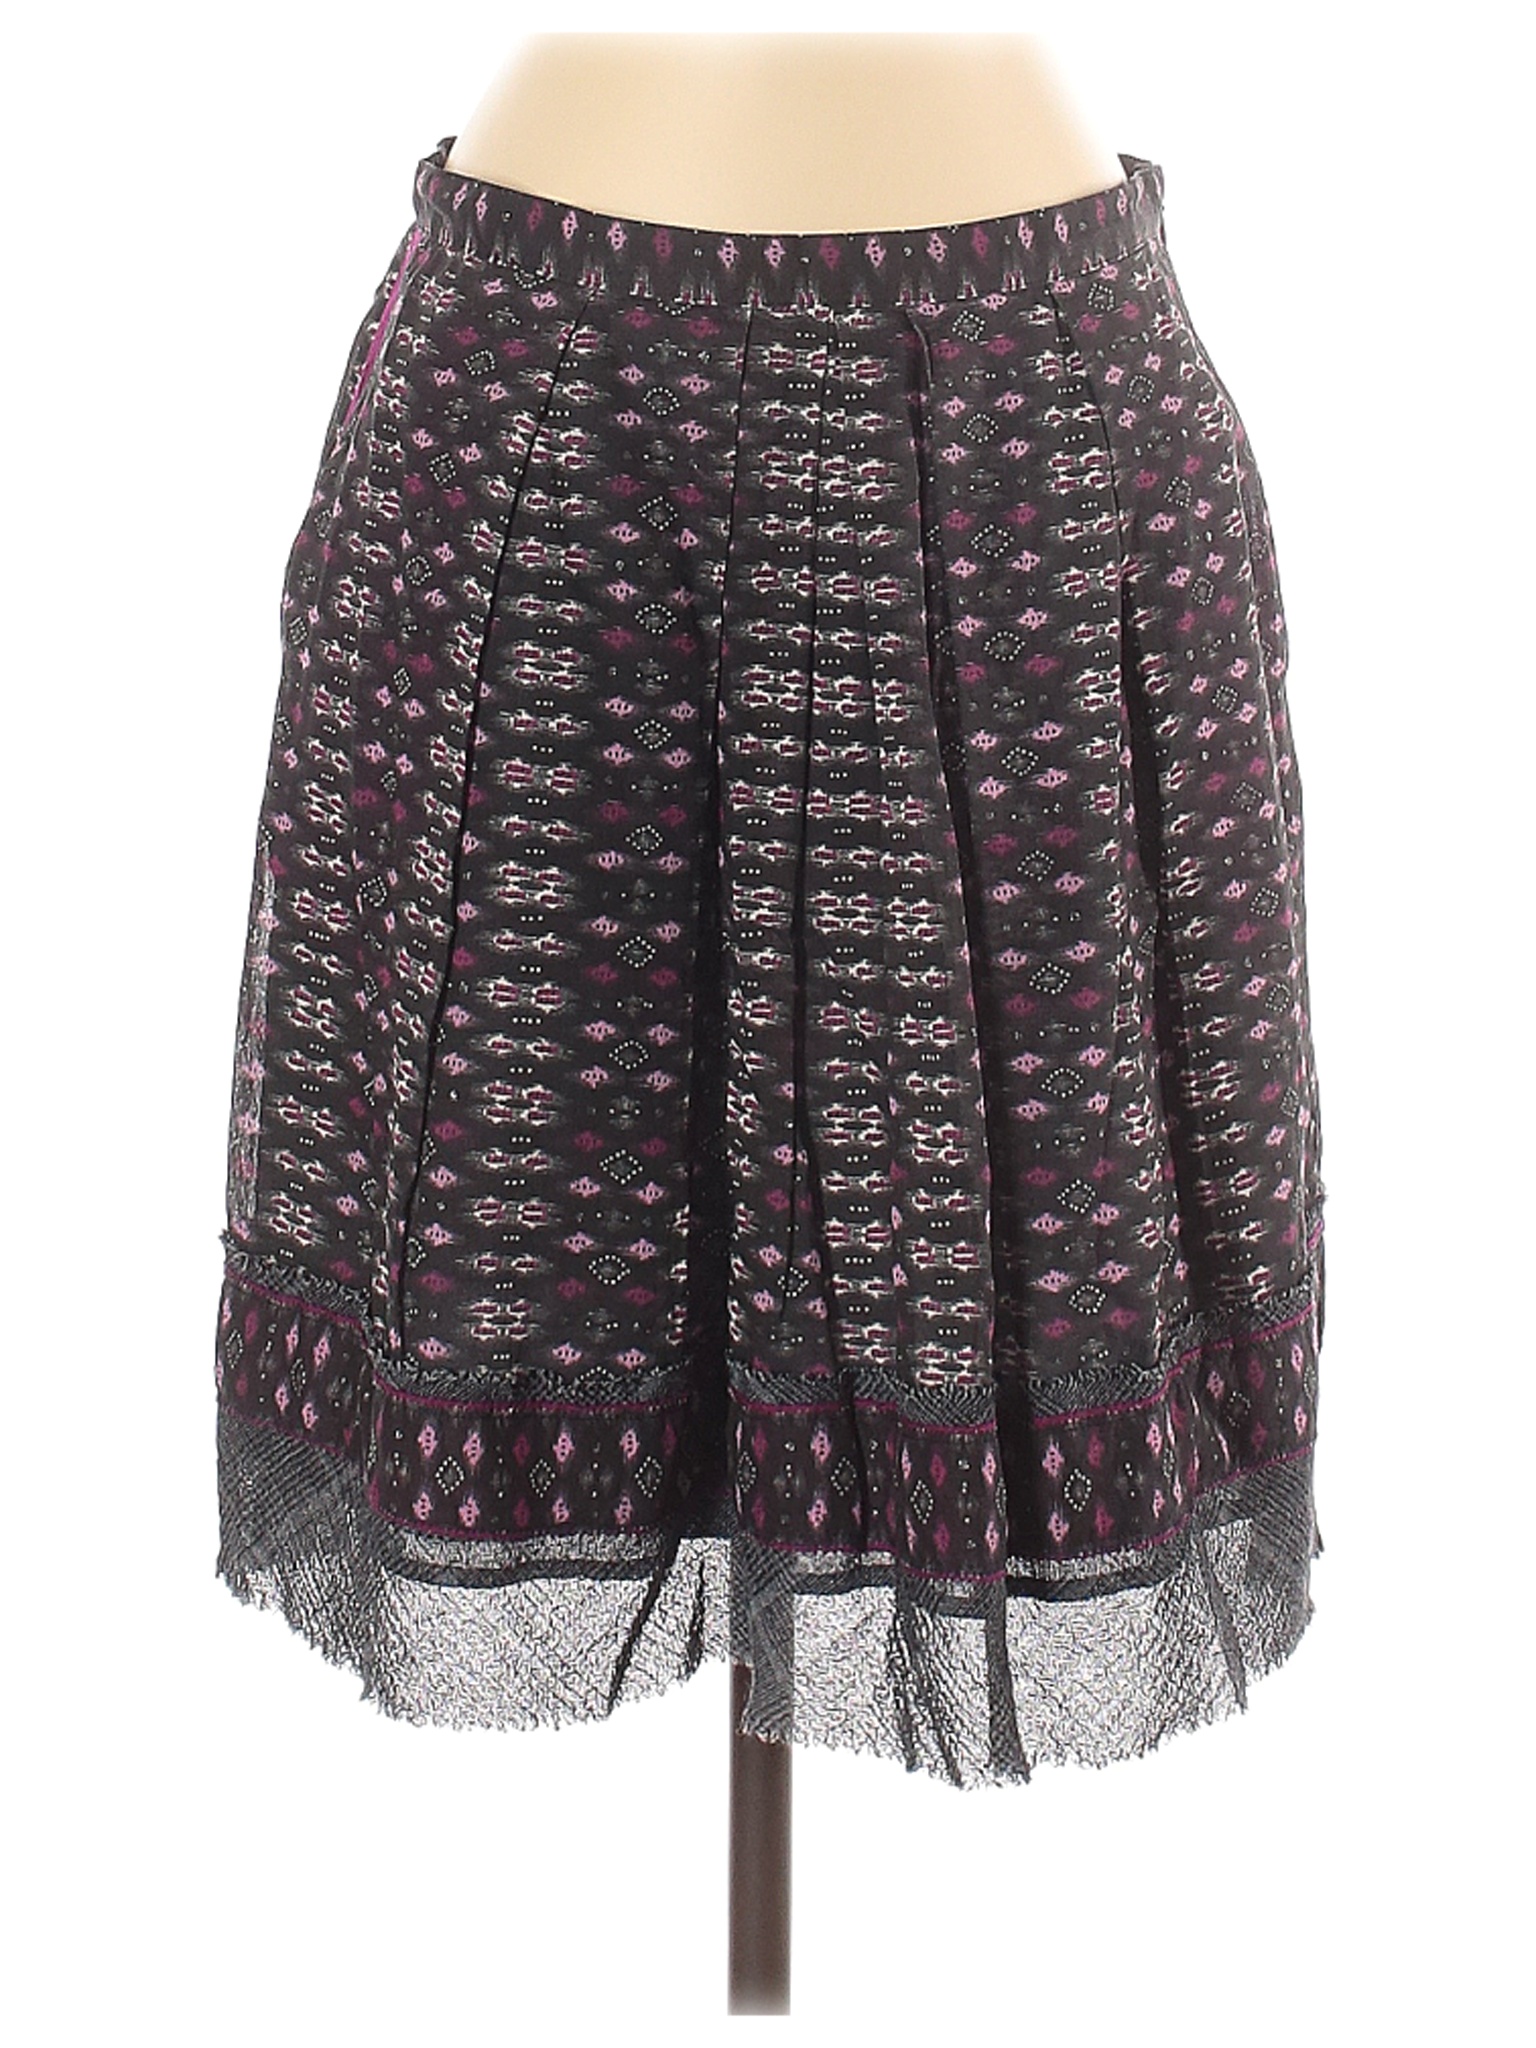 Cynthia Cynthia Steffe Women Purple Casual Skirt 2 | eBay